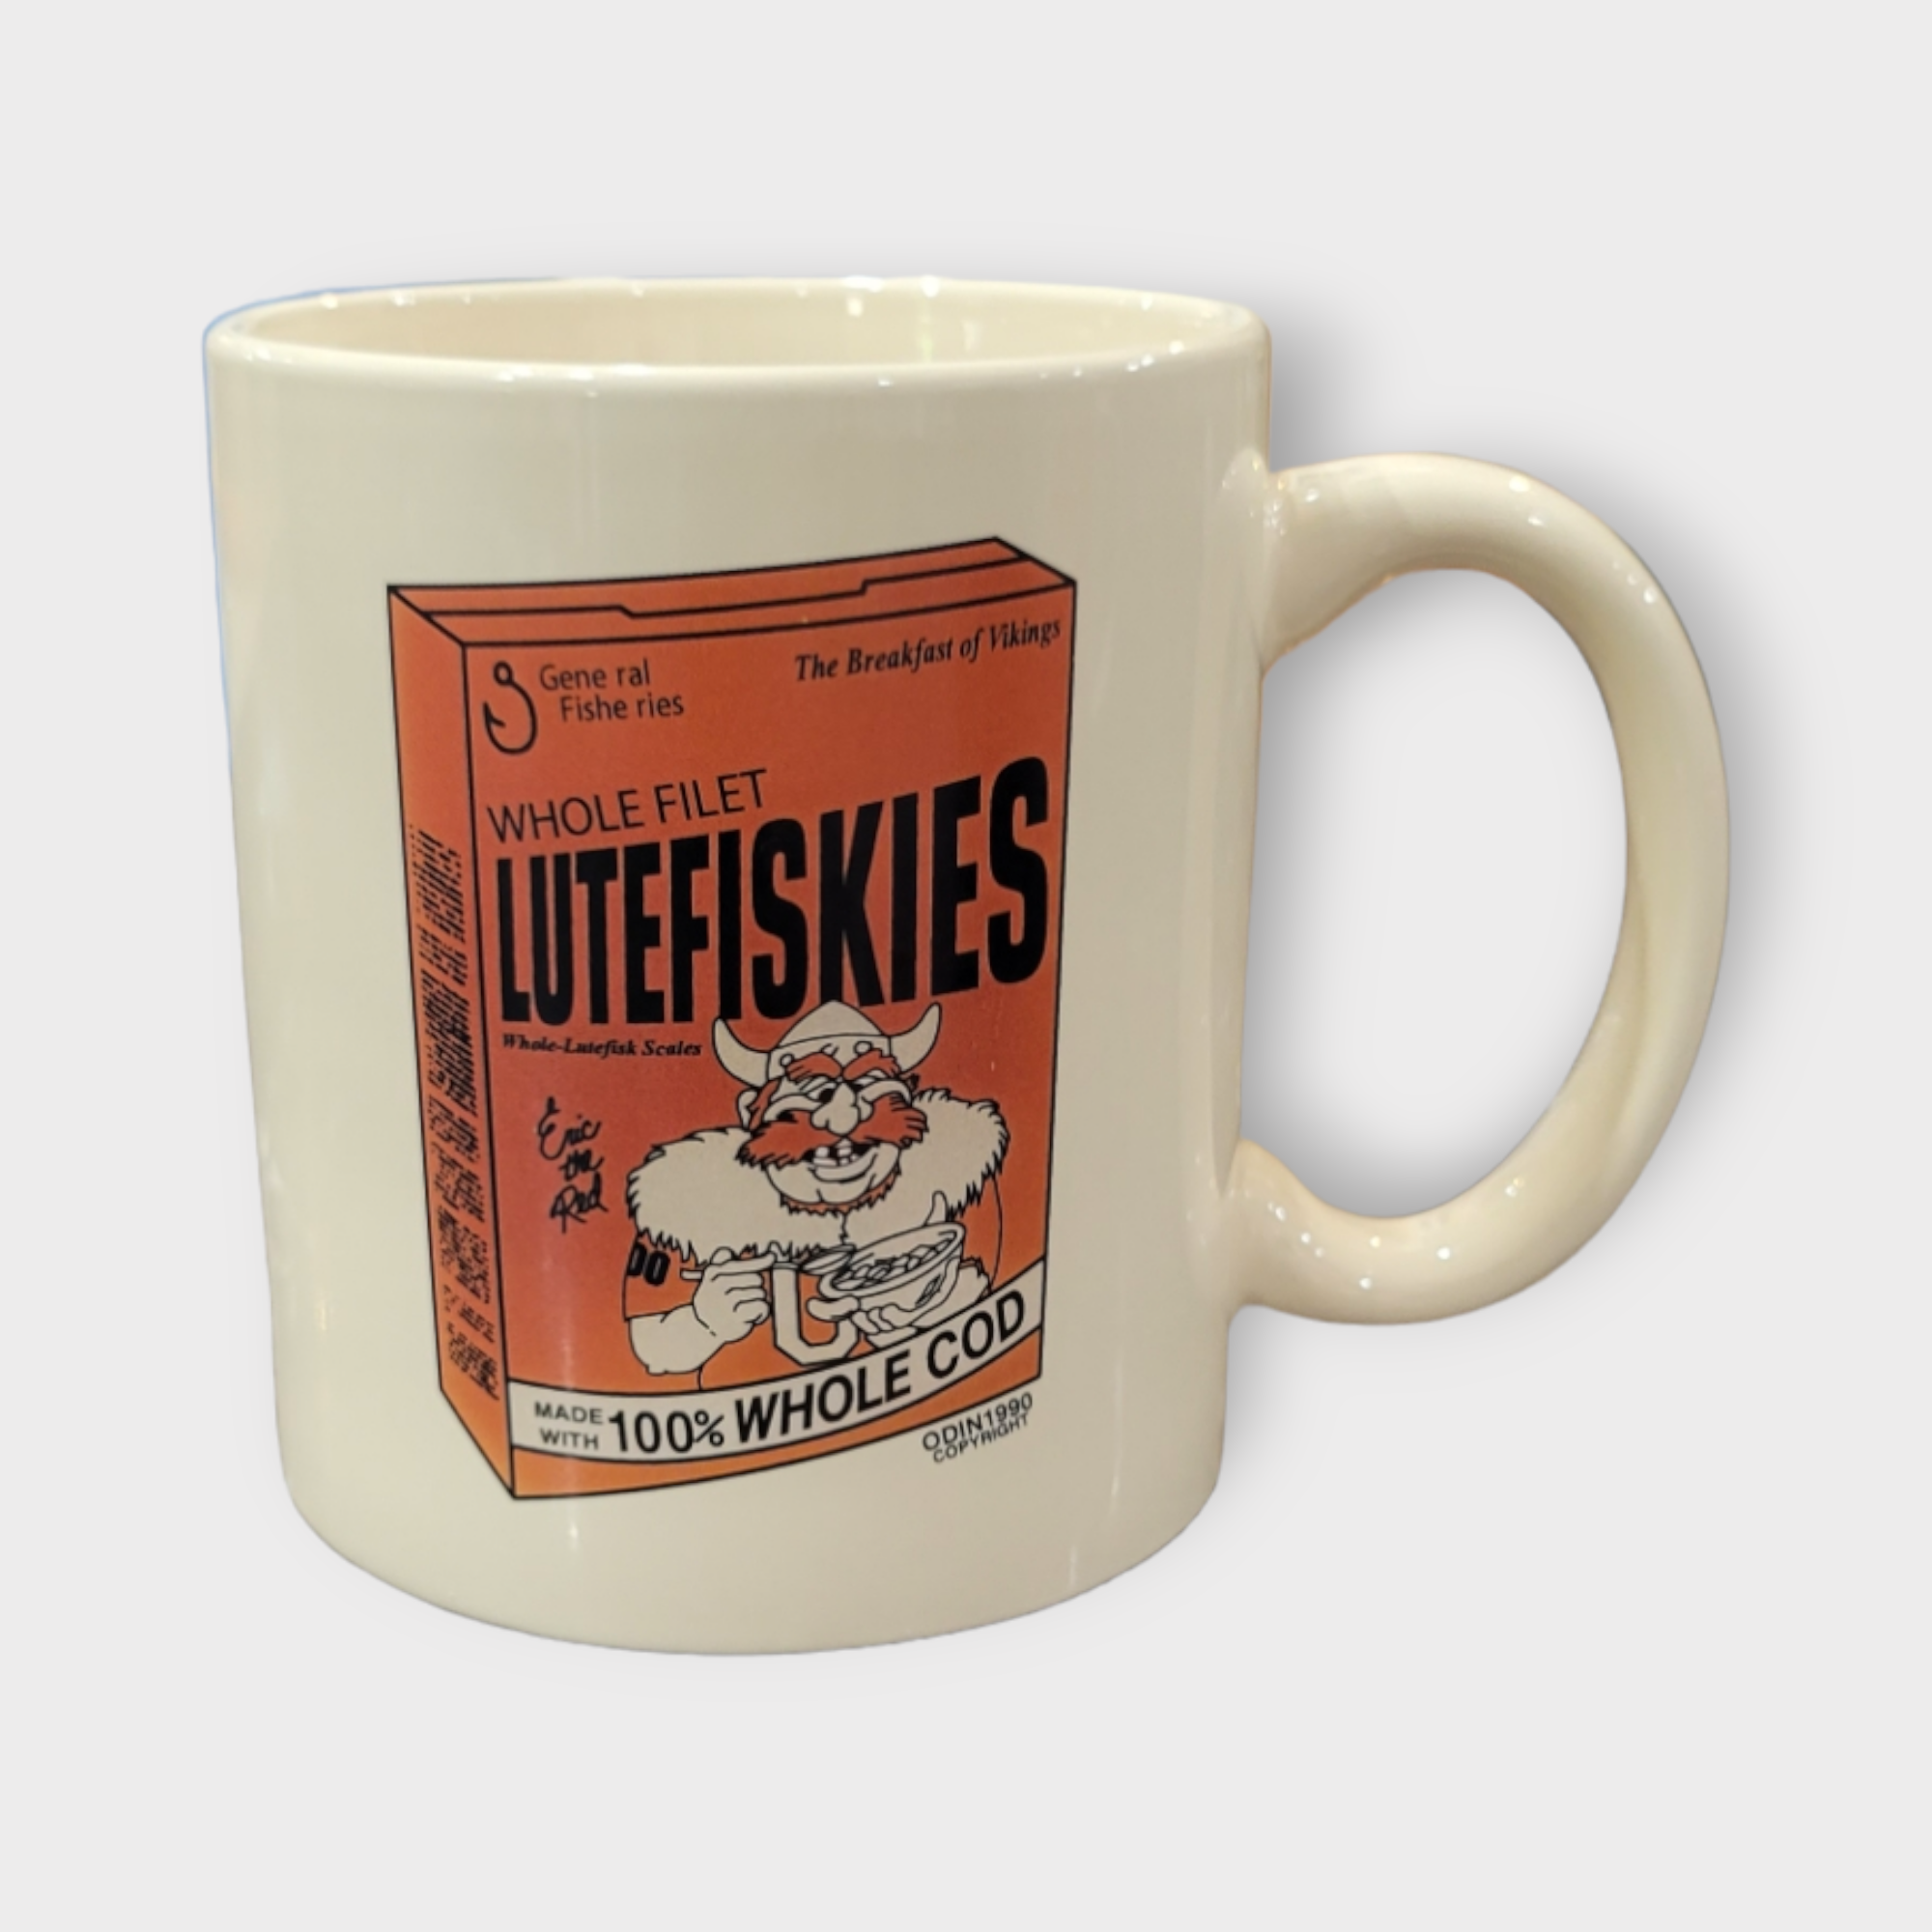 Mug: "Lutefiskies Breakfast of Vikings" (11oz)